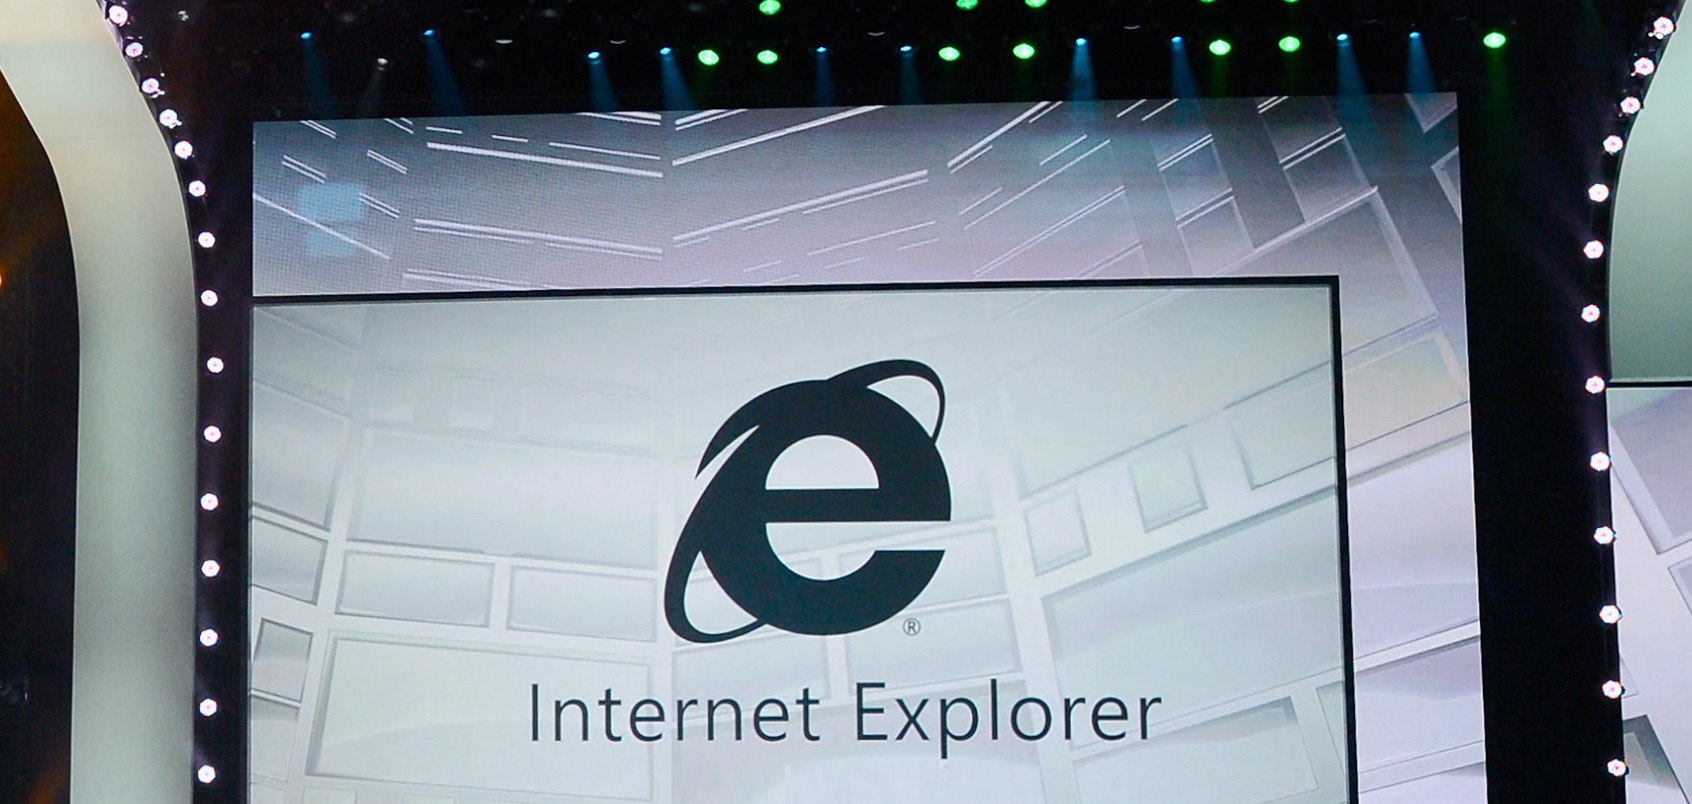 Internet Explorer se retira